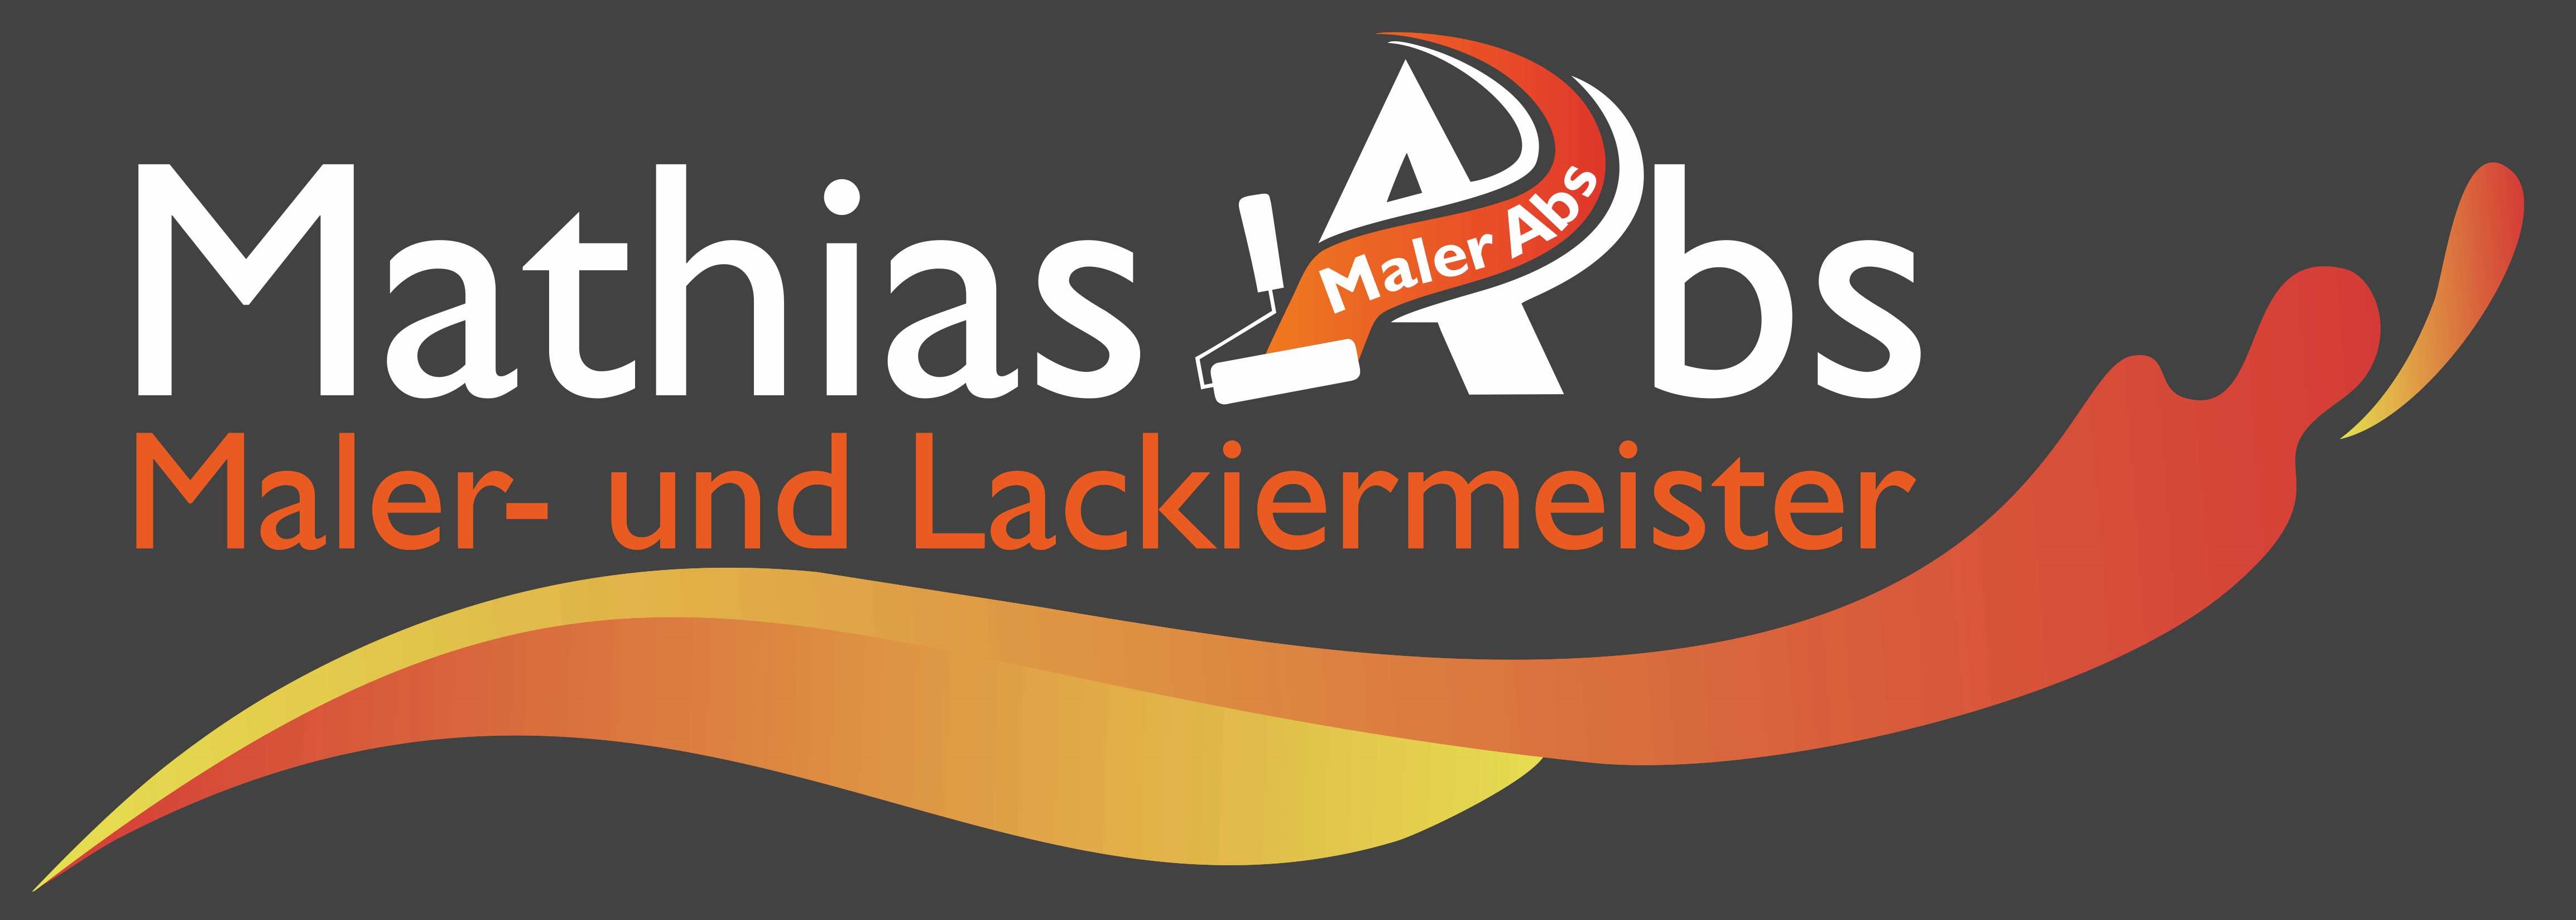 Mathias Abs Maler- und Lackiermeister Logo